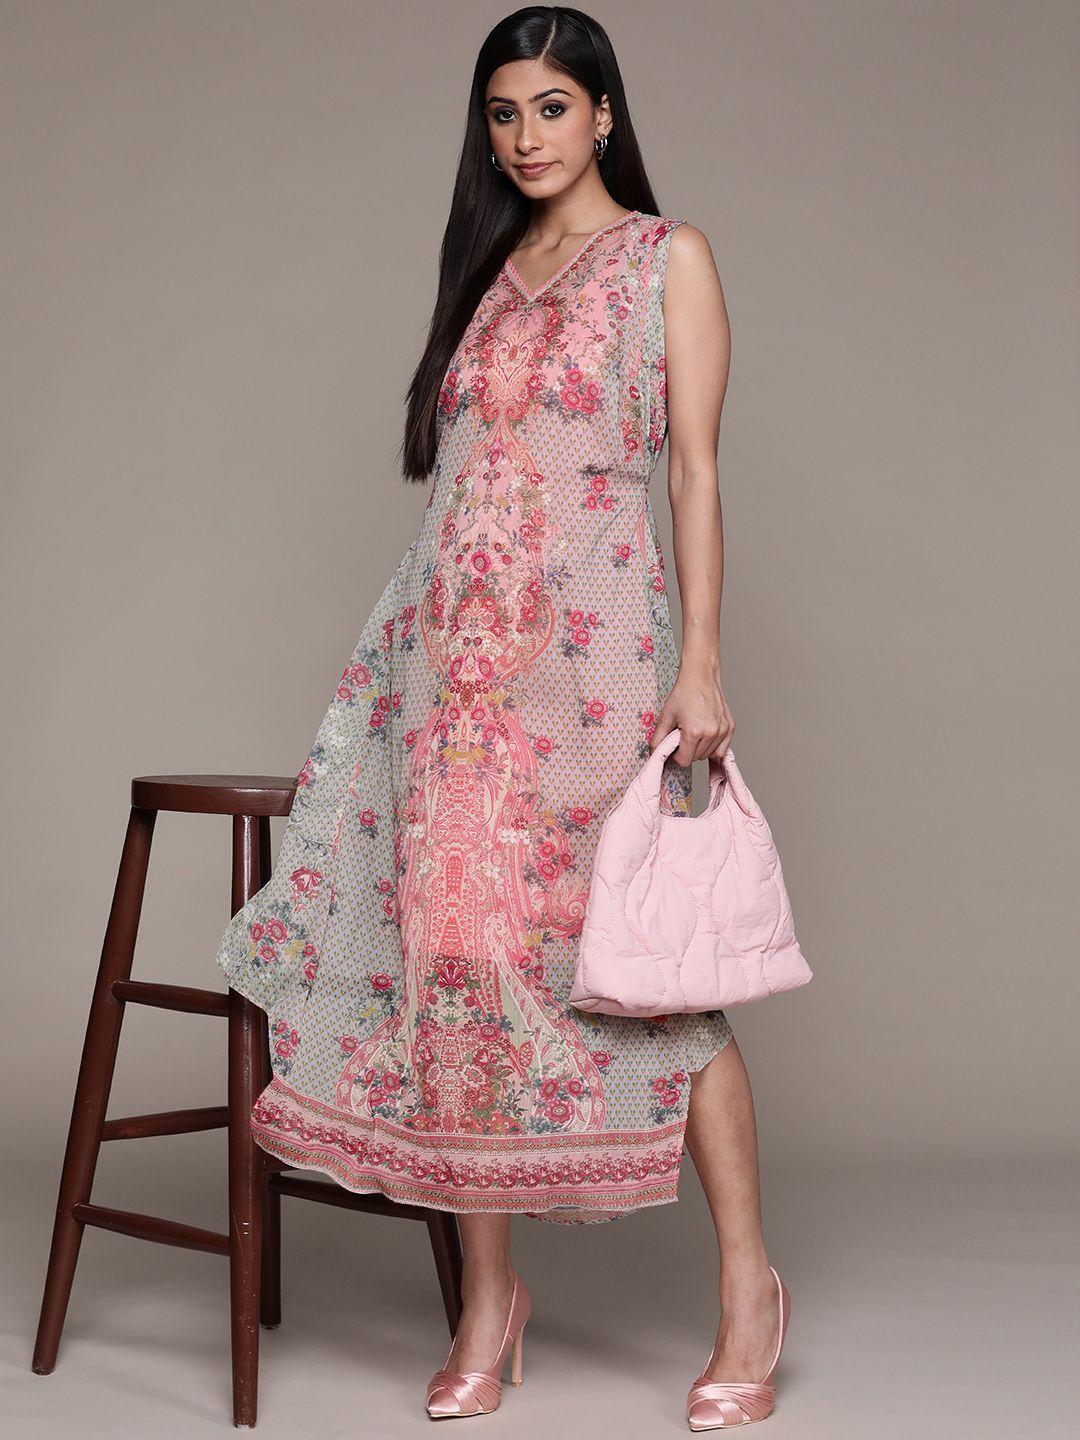 aarke ritu kumar women pink ethnic motifs printed chiffon a-line midi dress with camisole